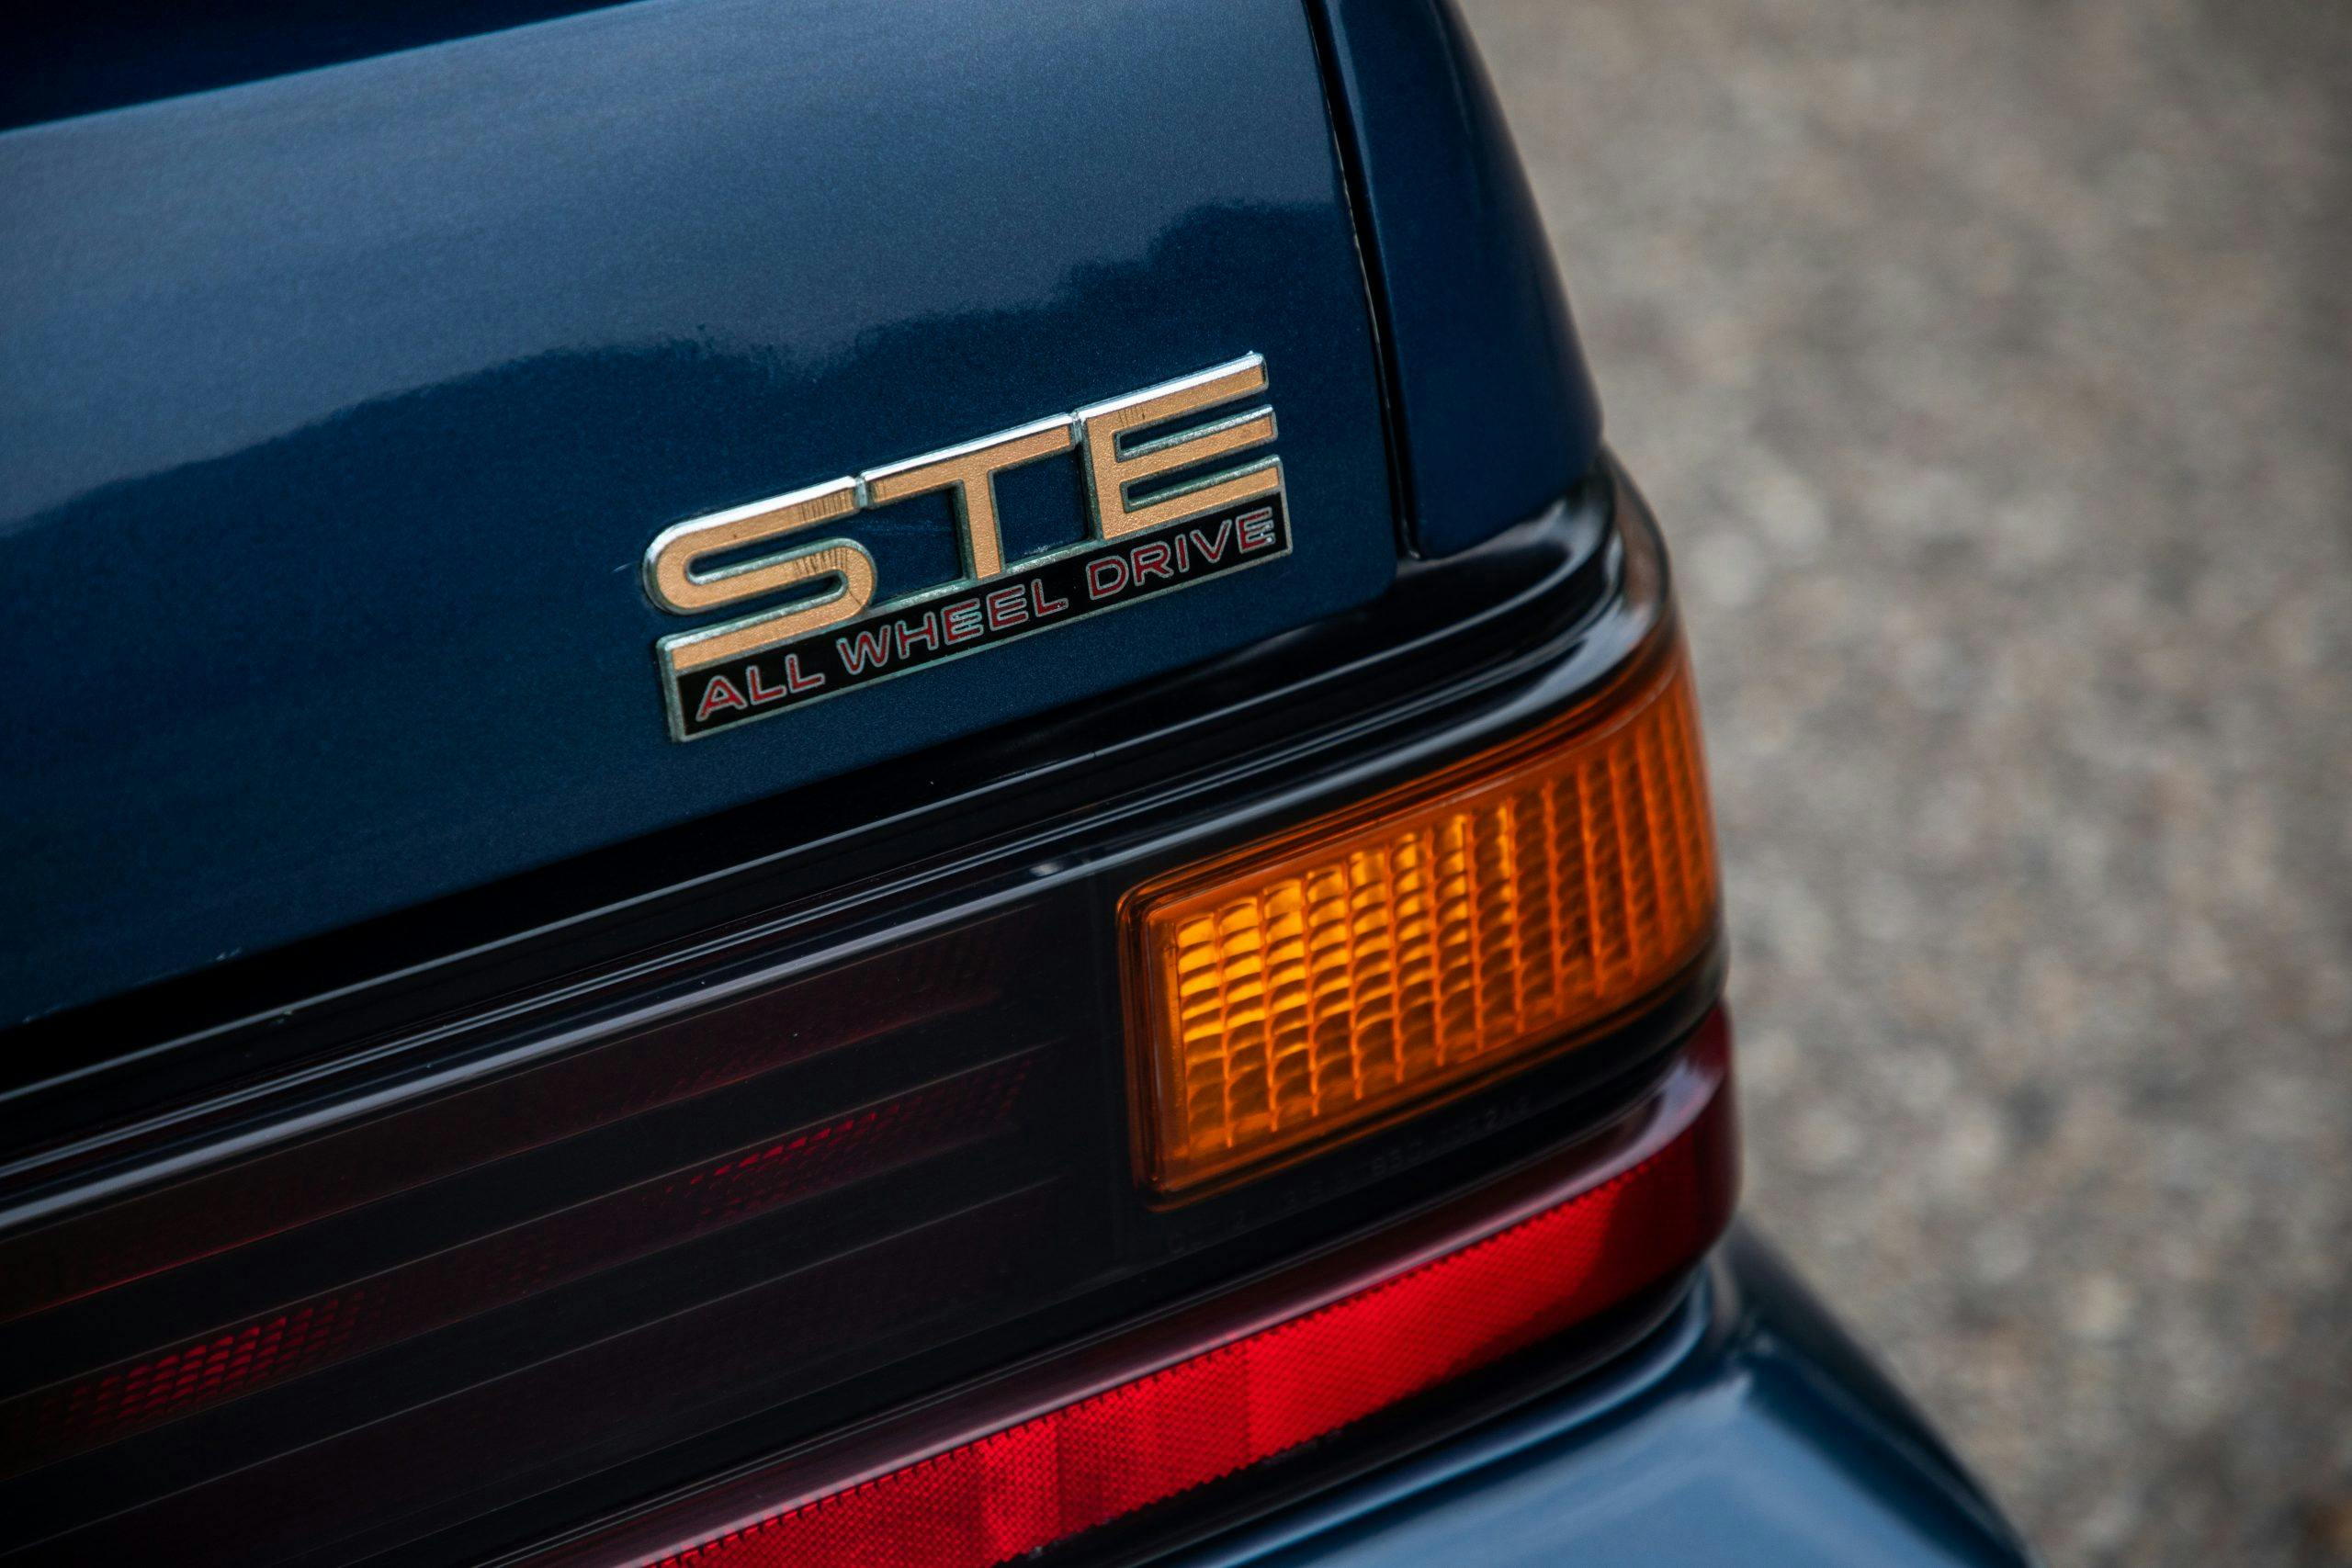 1989 Pontiac 6000STE AWD rear badge lettering detail